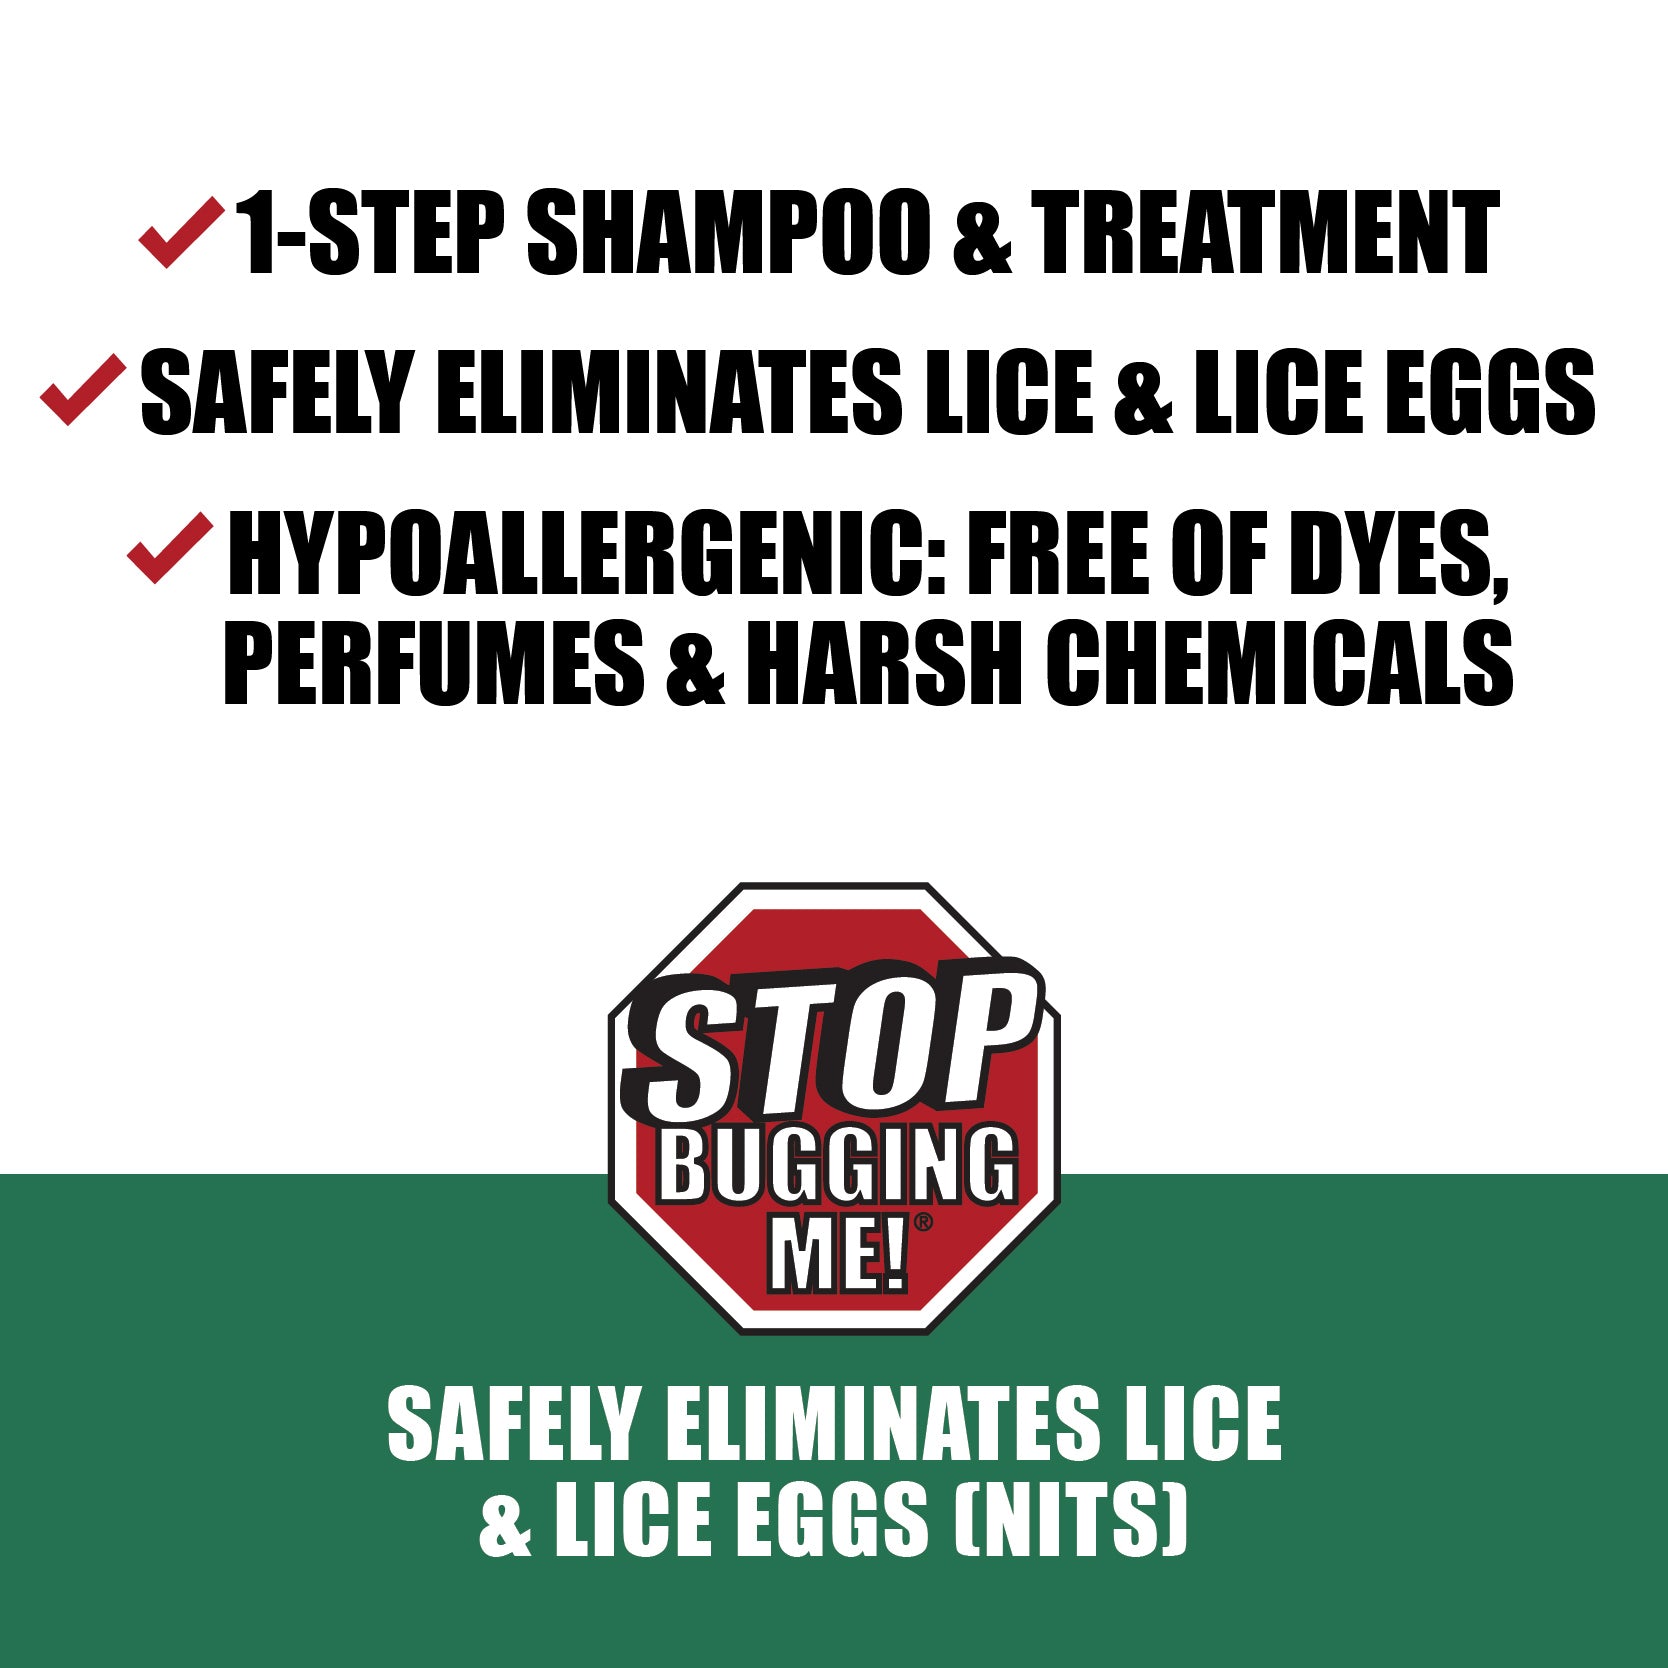 Stop Bugging Me!® Super Lice Shampoo